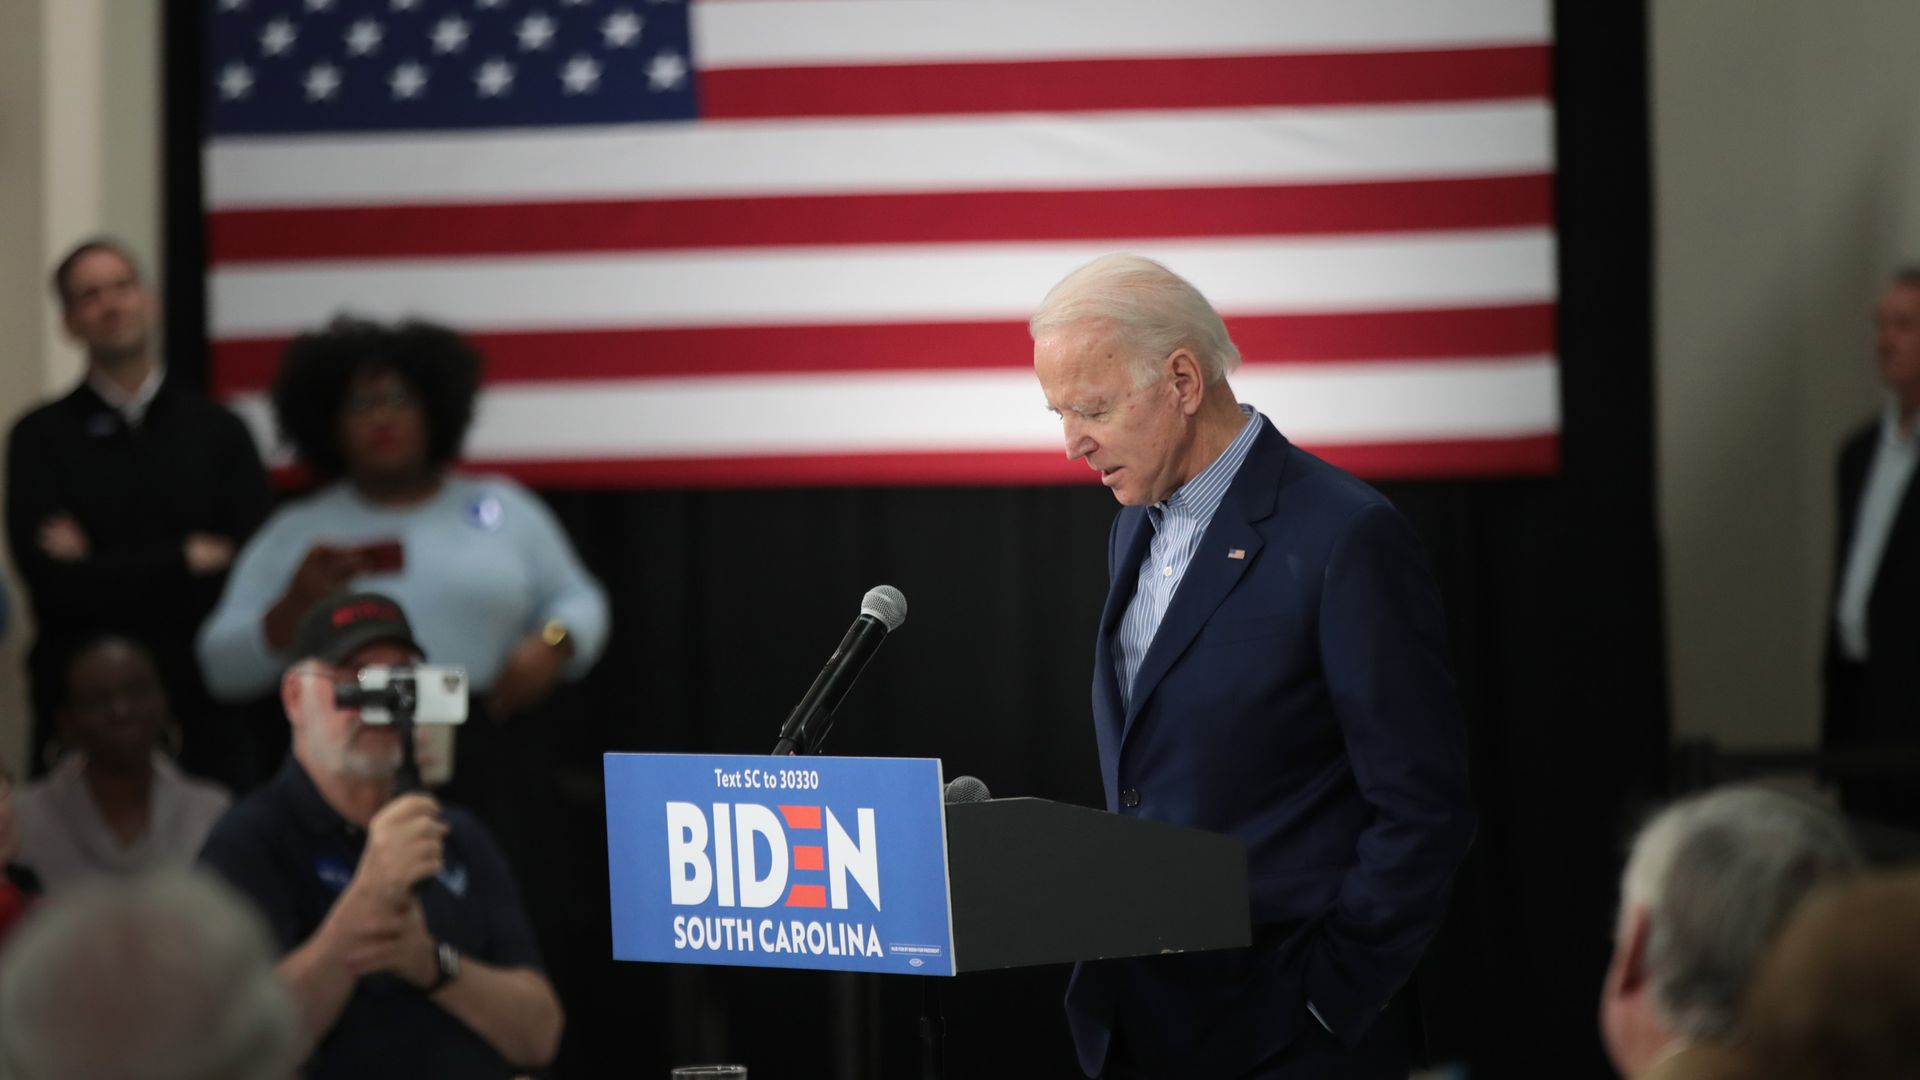 Joe Biden speaking at a campaign rally in South Carolina